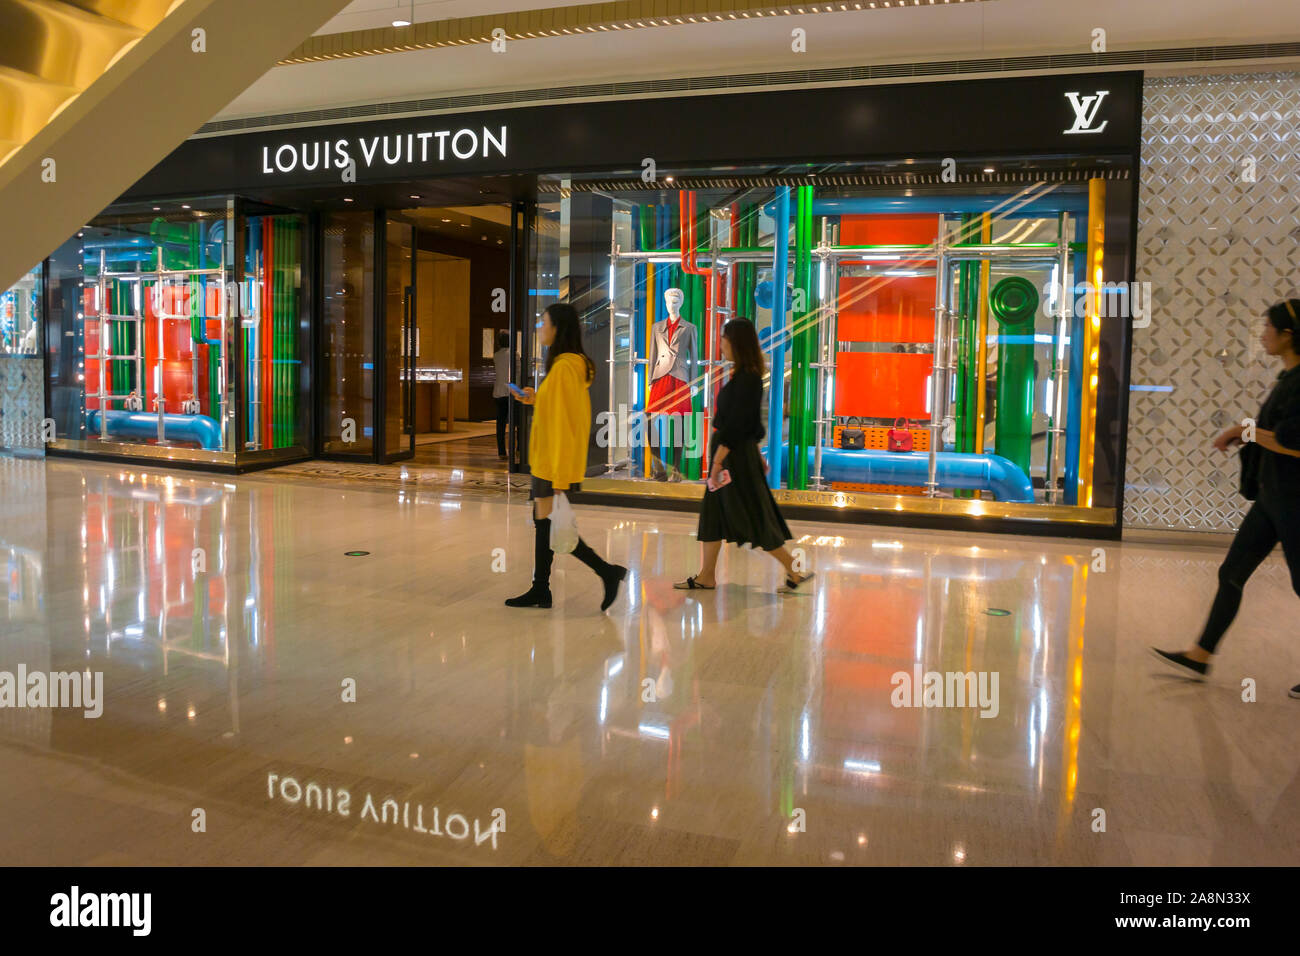 Louis Vuitton Flagship Store #Retail #Store #Windows